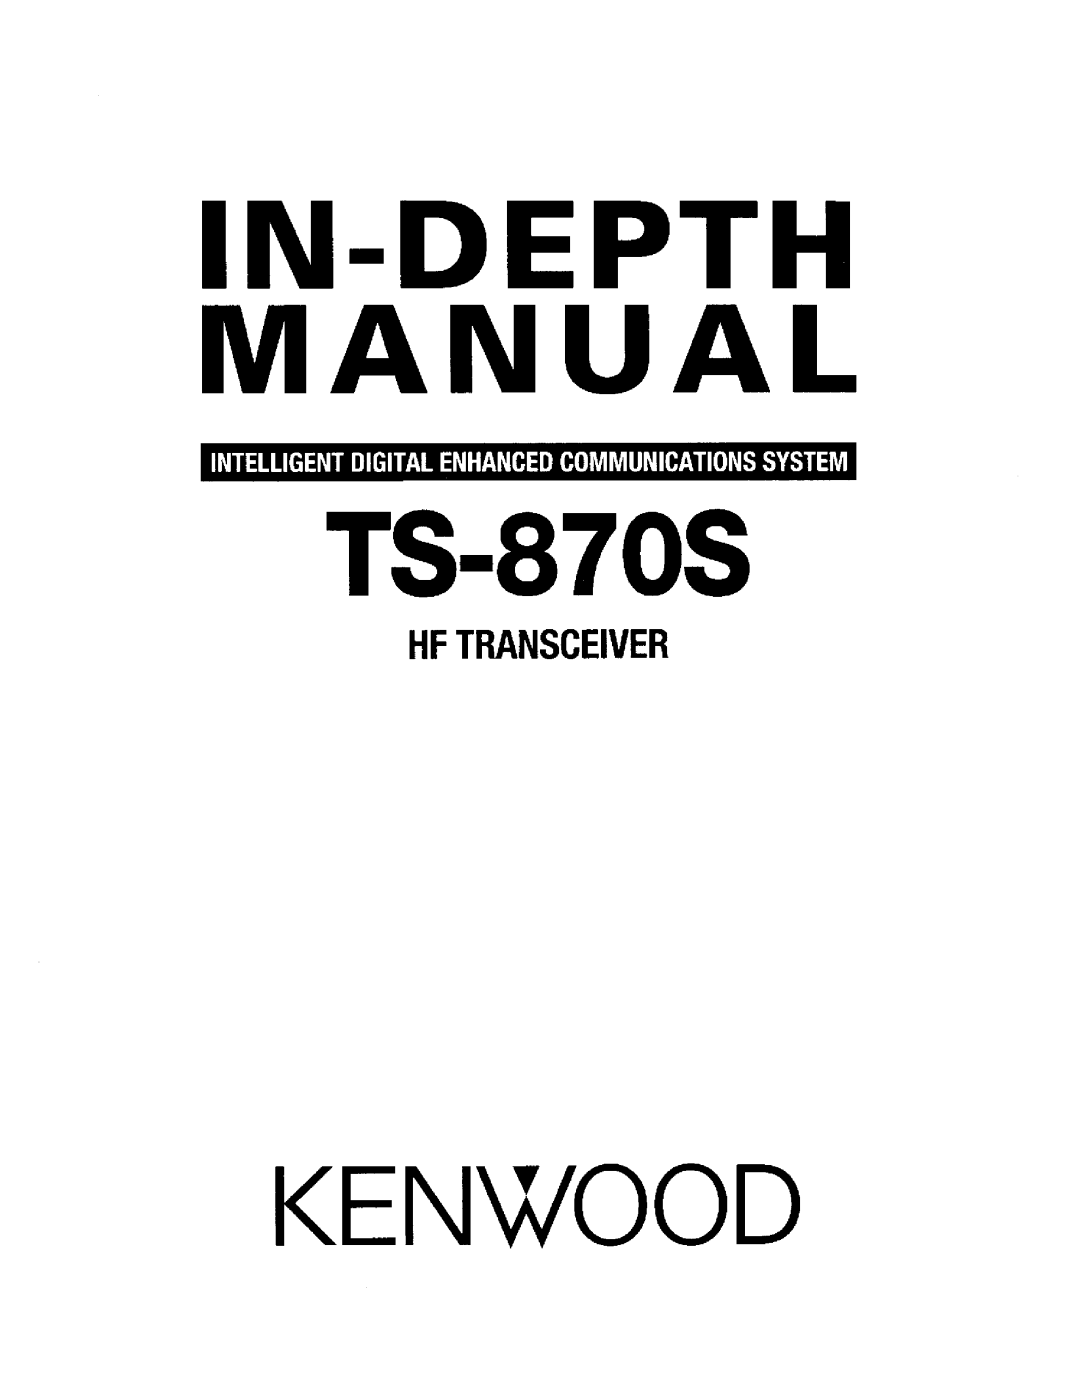 Kenwood TS-870S instruction manual Intelligent Digital Enhanced Communications System, Instruction Manual, Hf Transceiver 